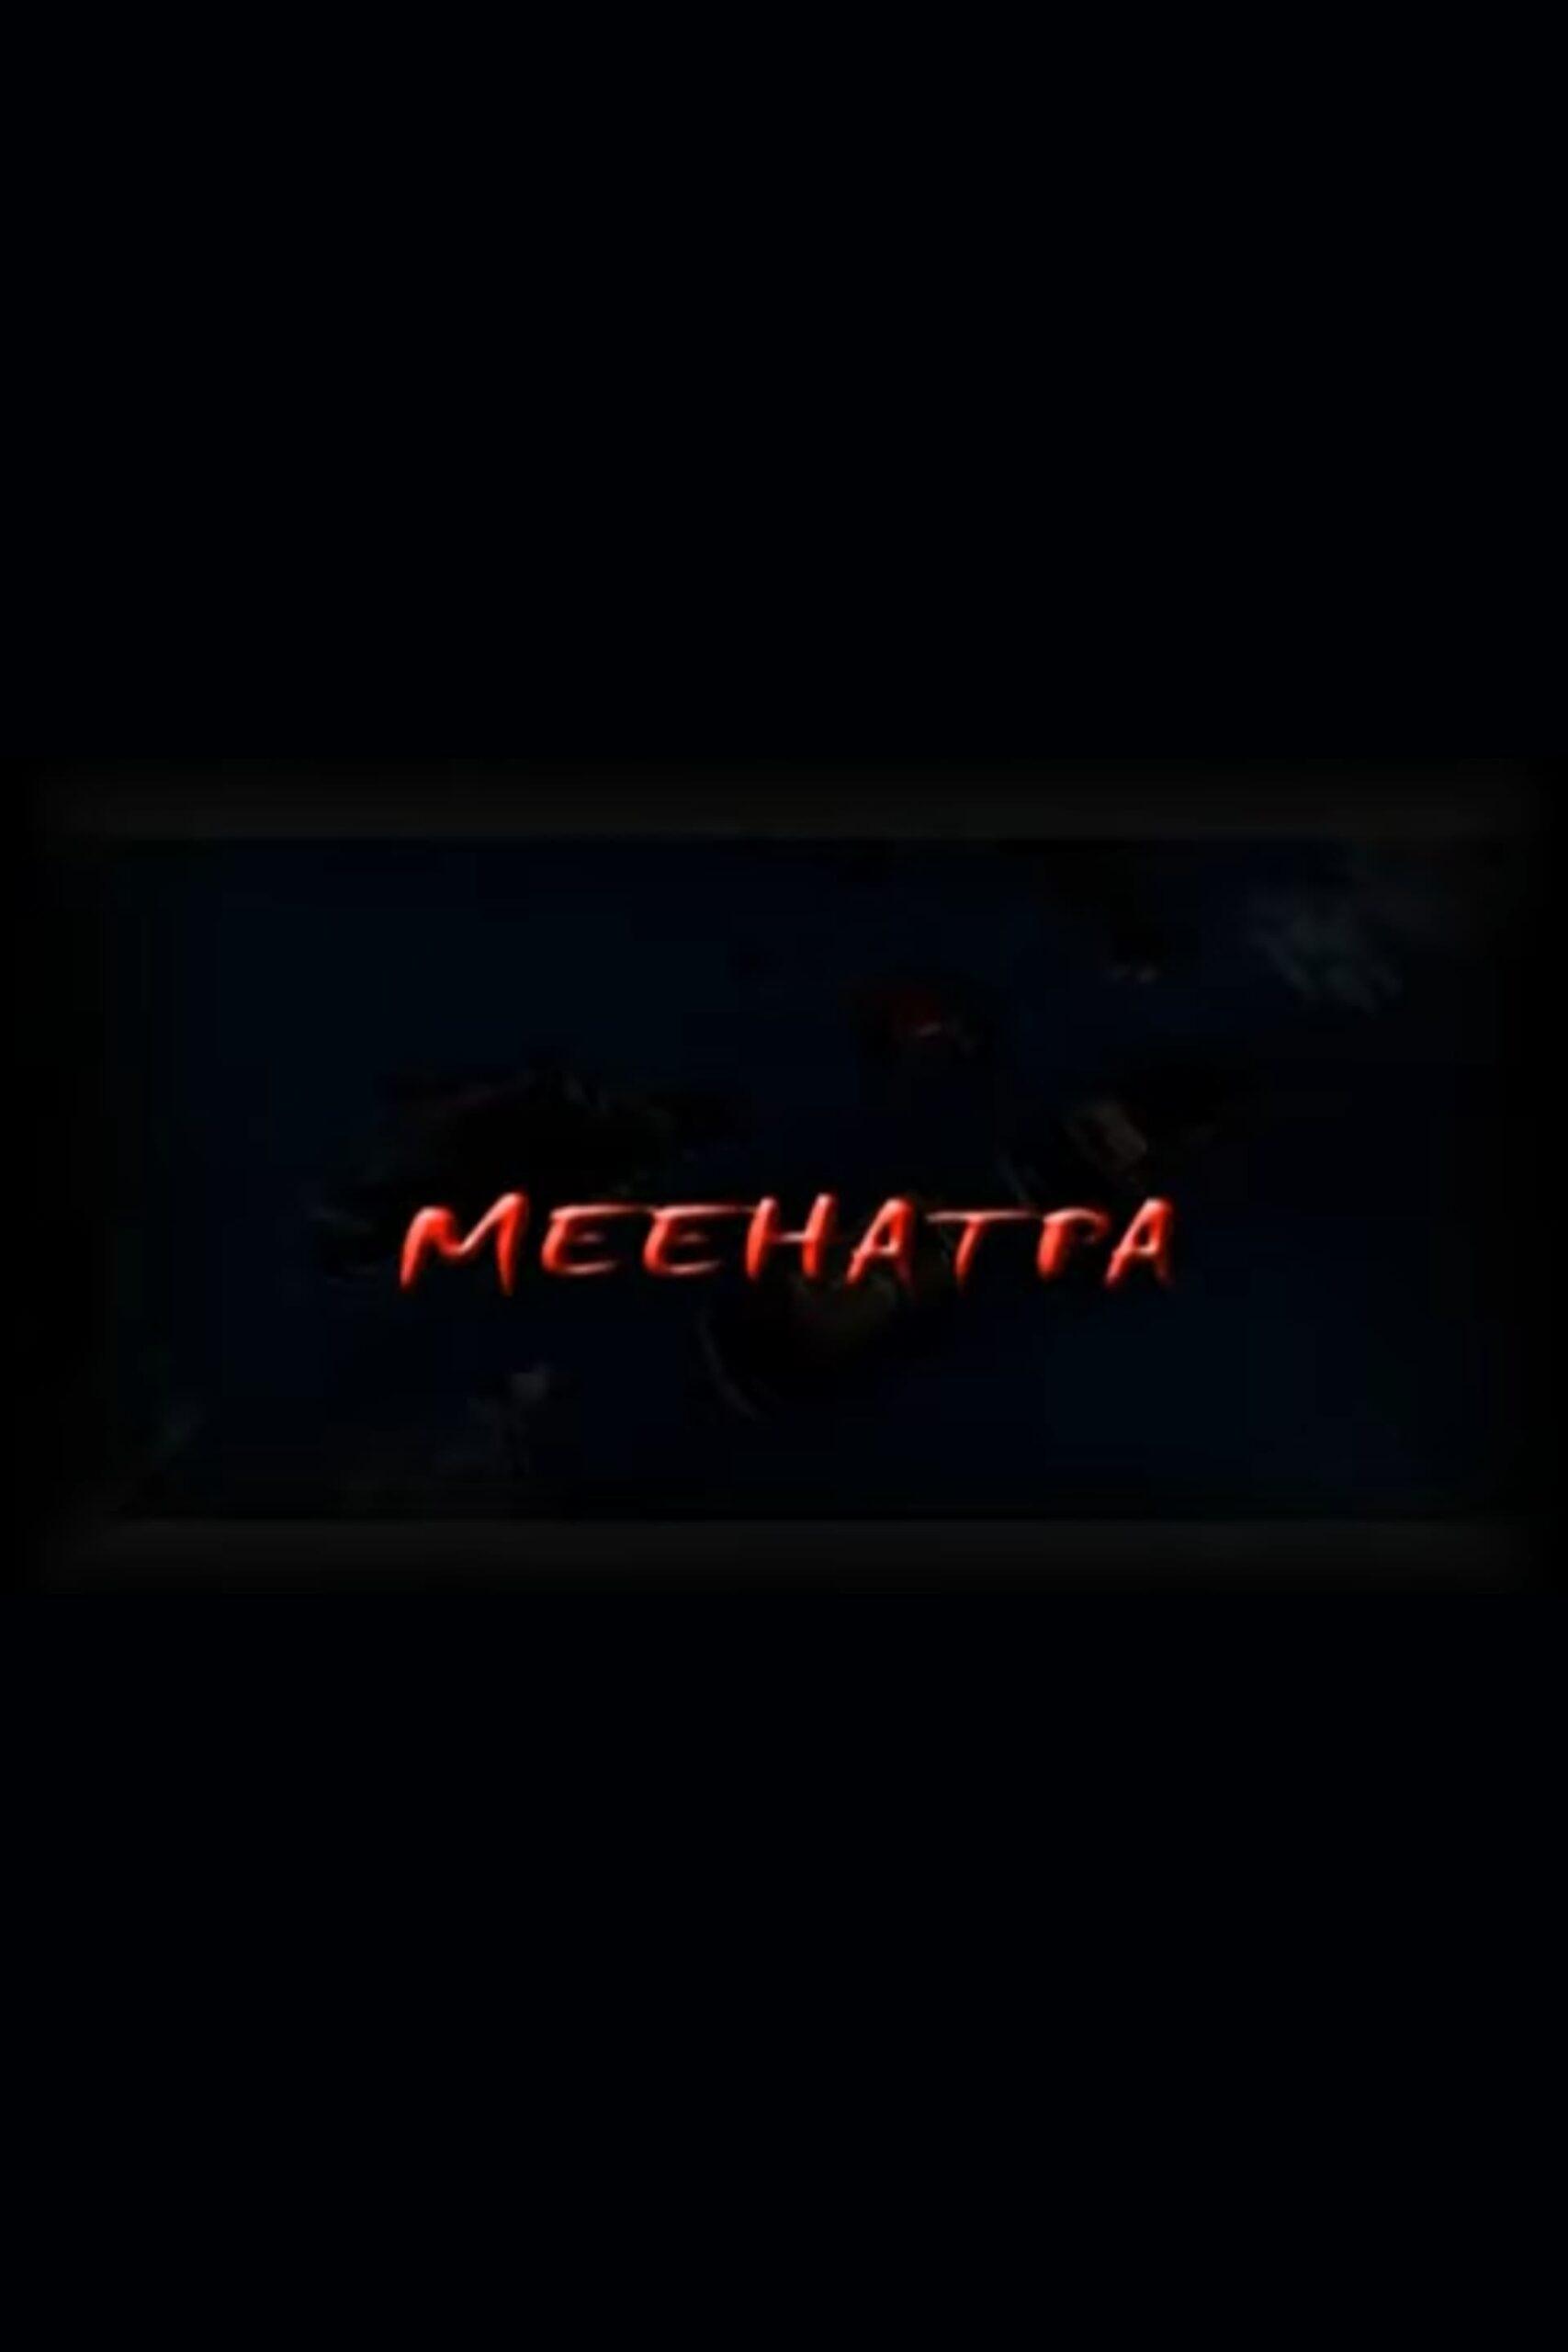 Meehatpa (2011)